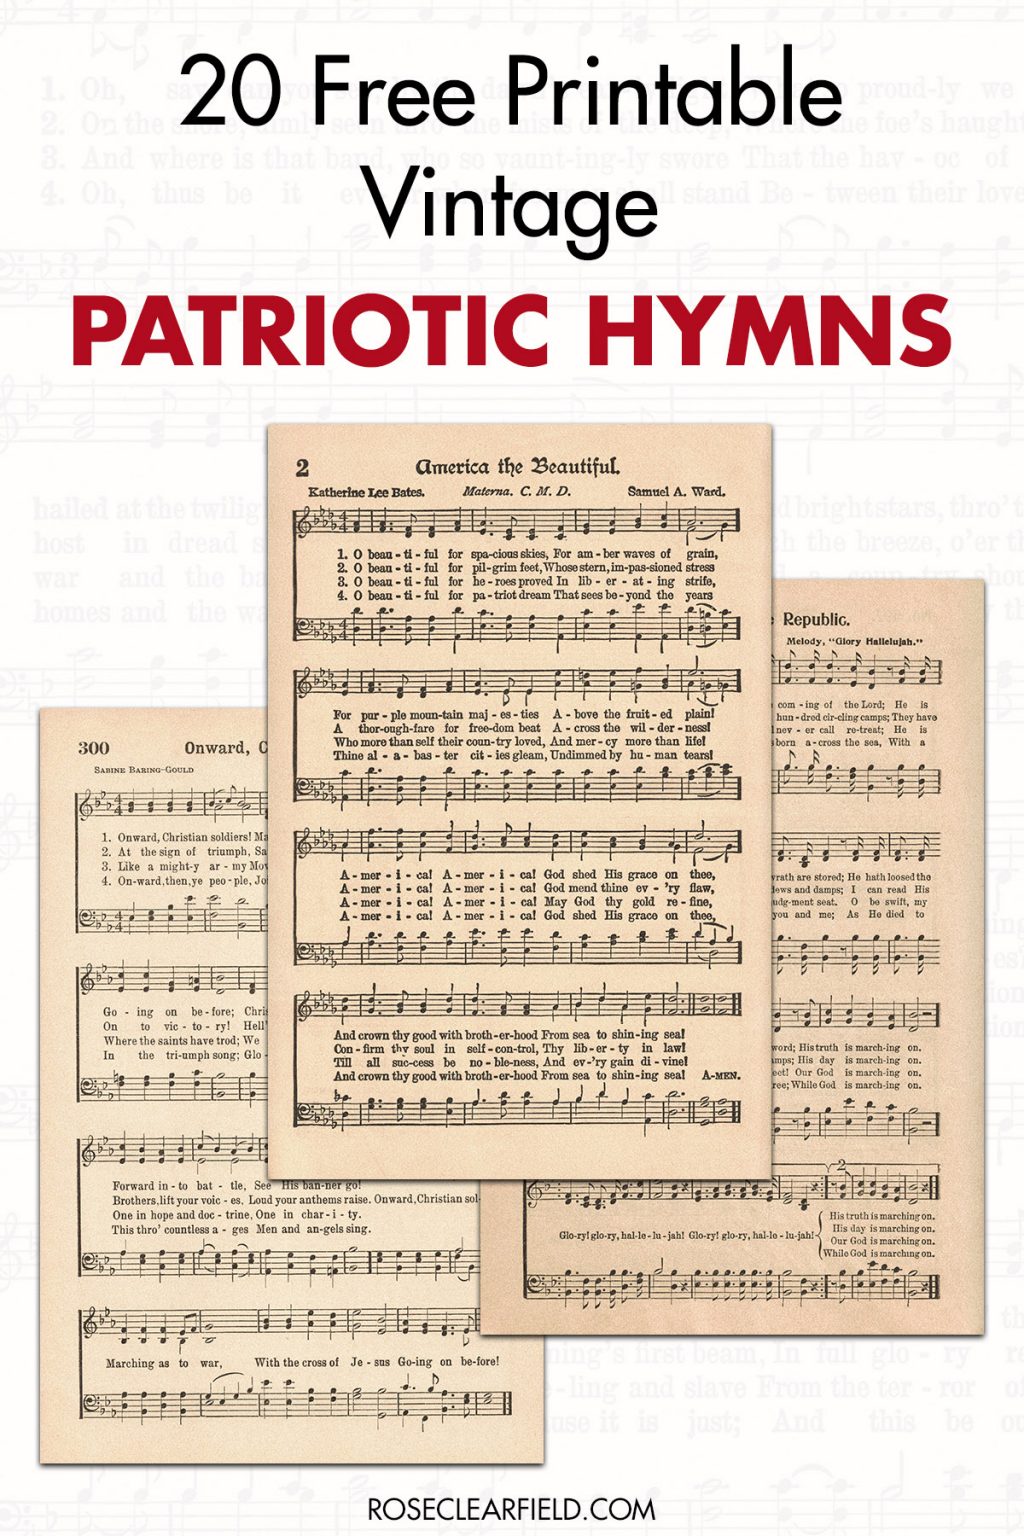 20-free-printable-vintage-patriotic-sheet-music-hymns-rose-clearfield